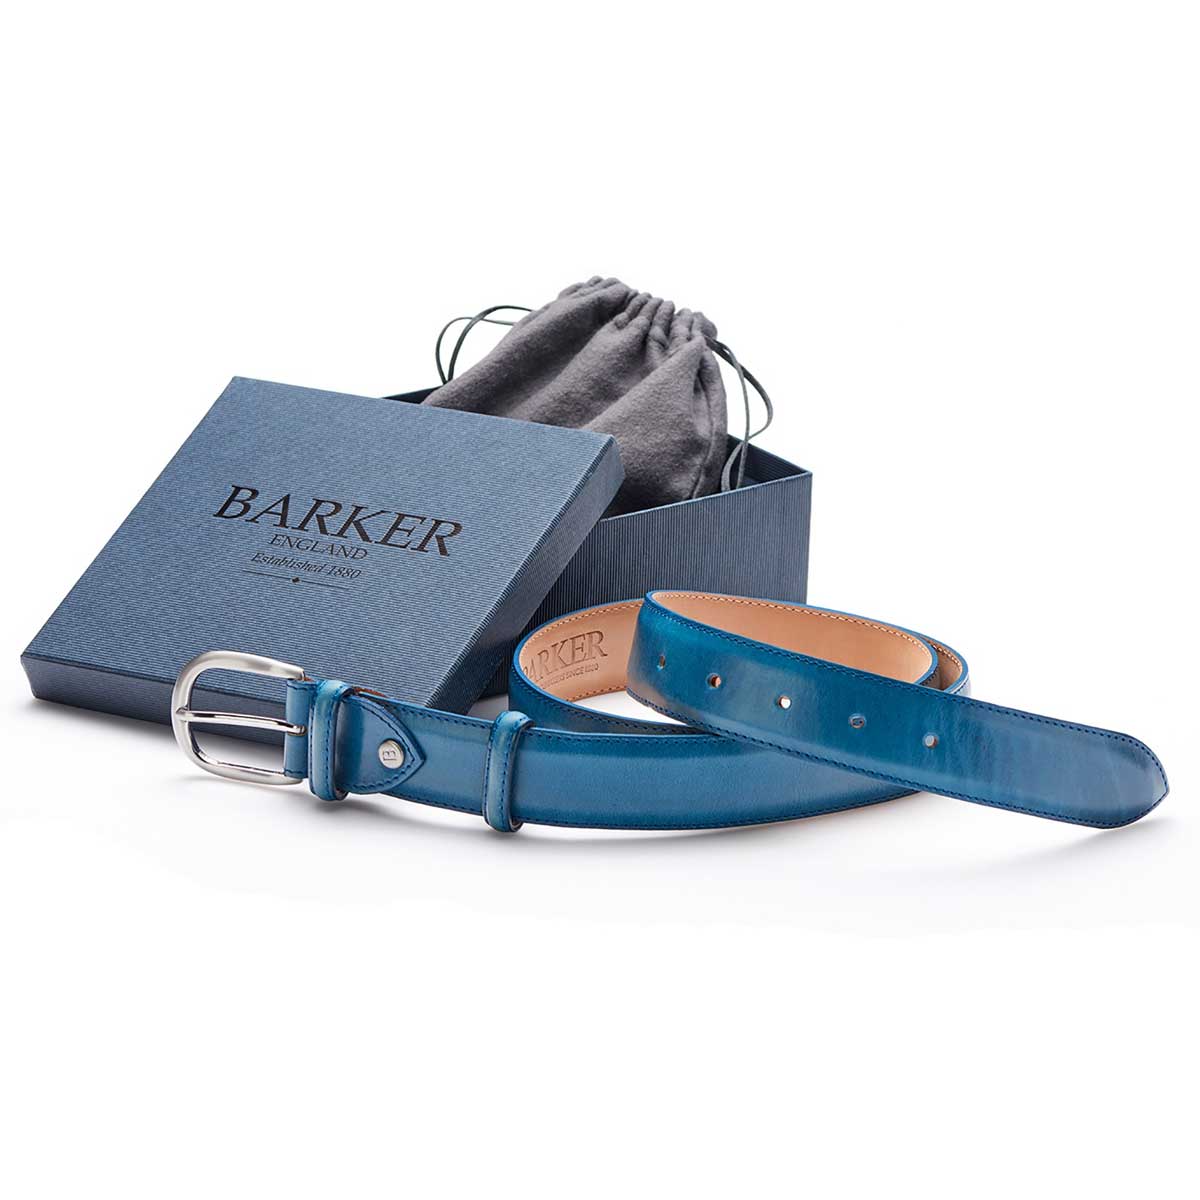 Barker Leather Plain Belt - Blue Hand Painted